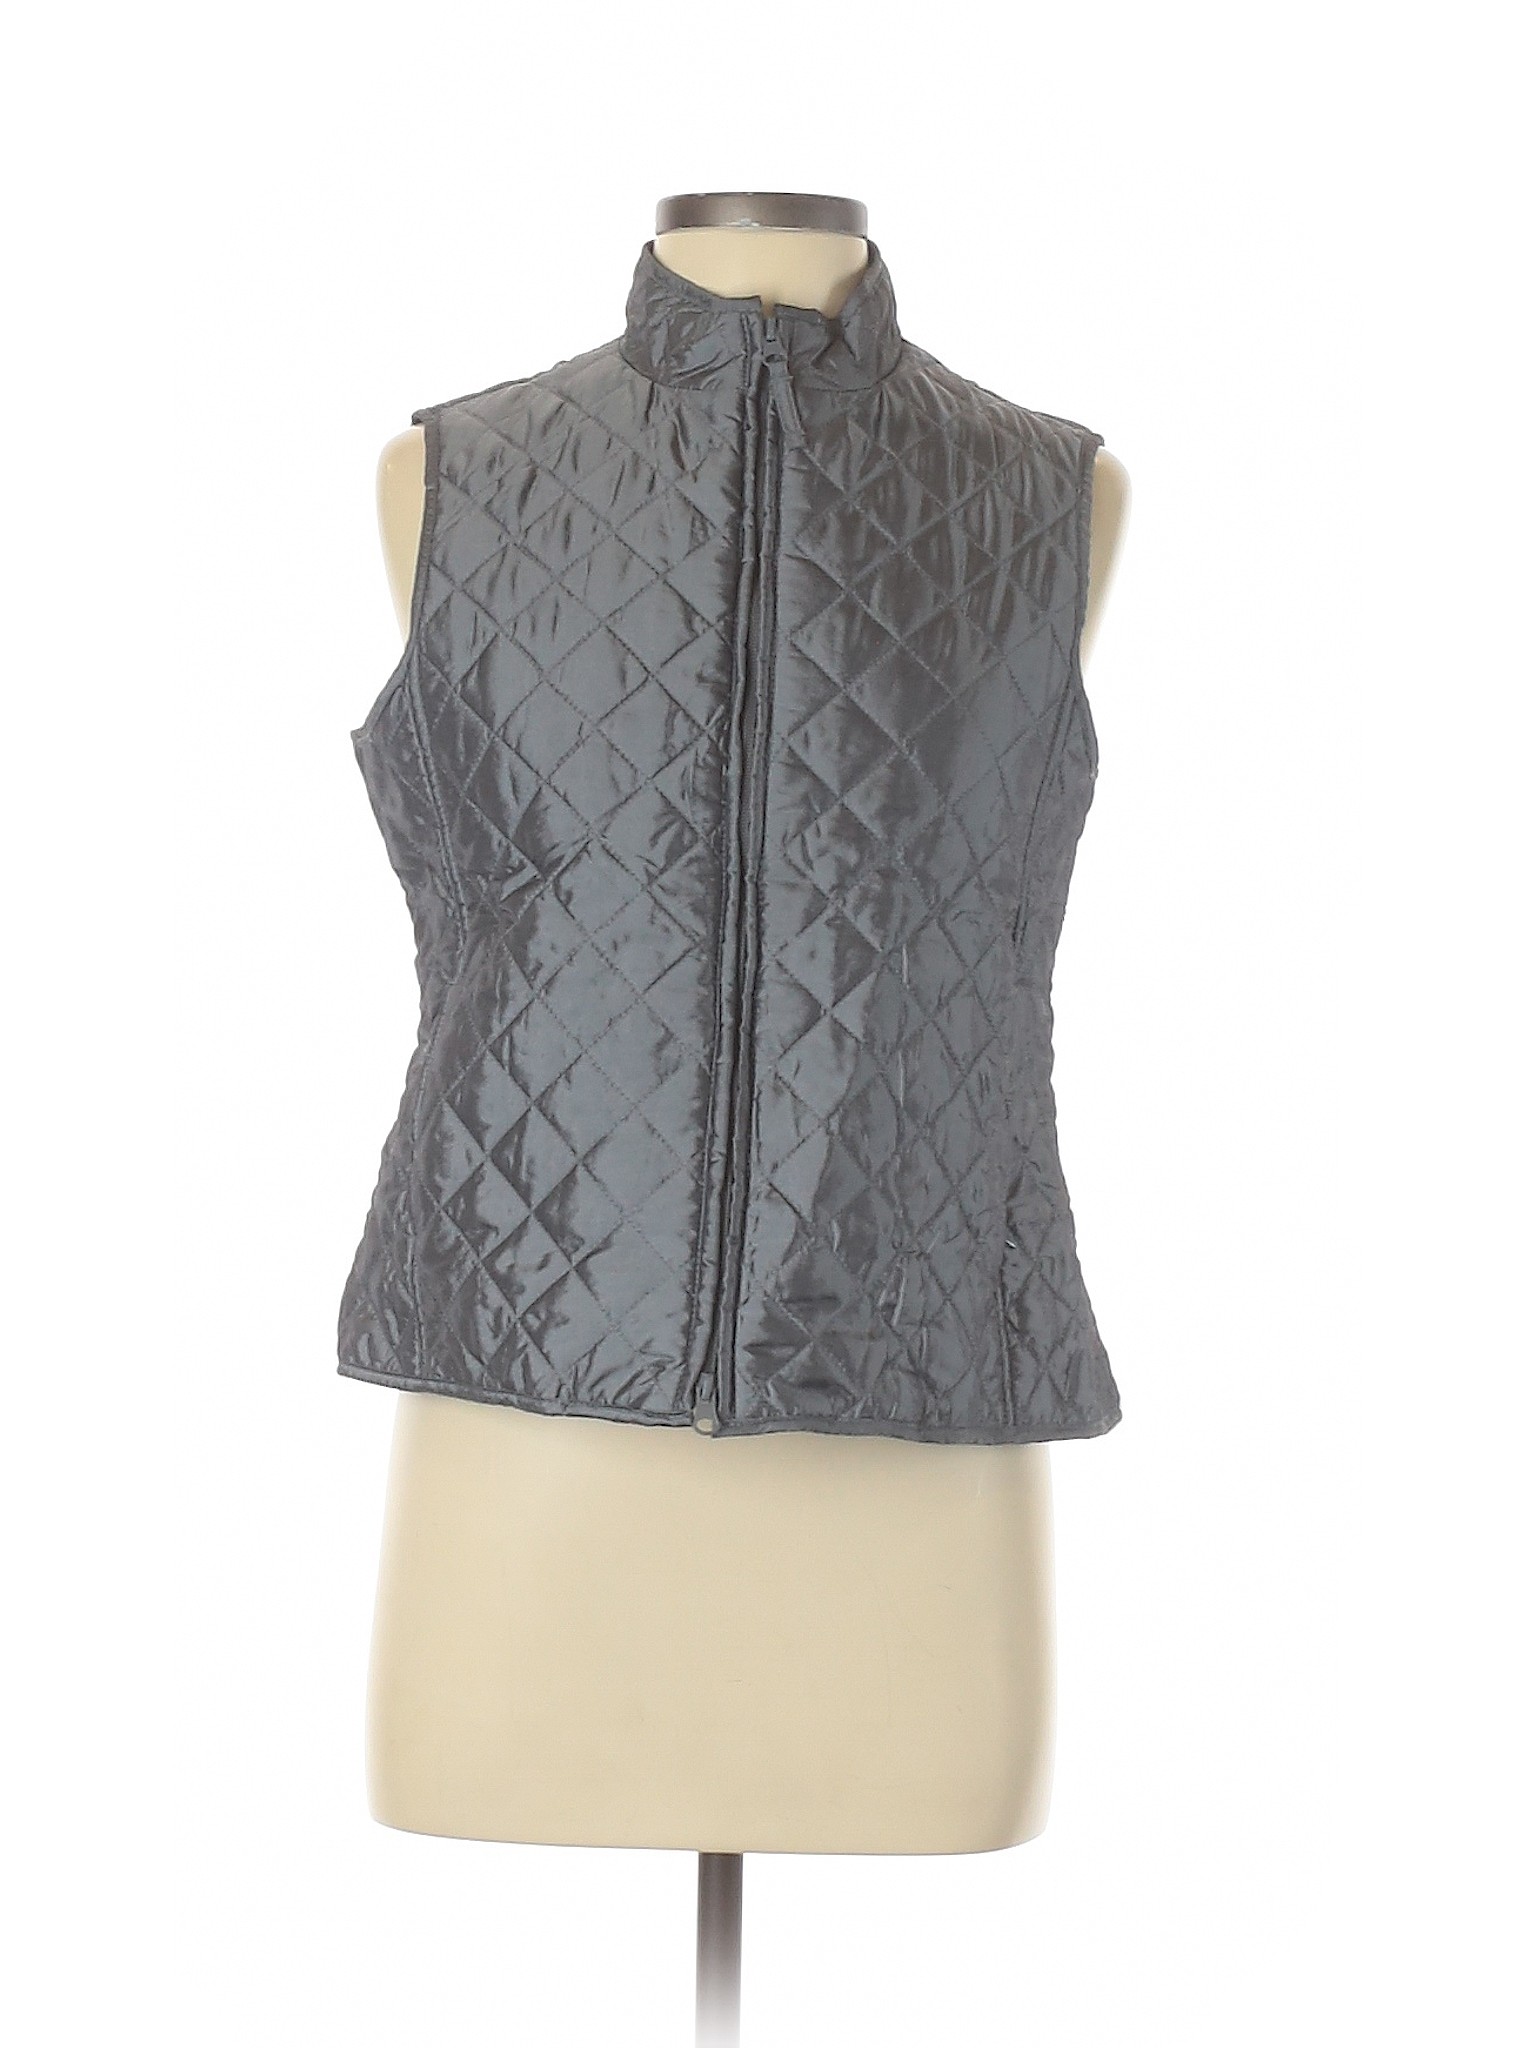 Unbranded Women Gray Vest M | eBay